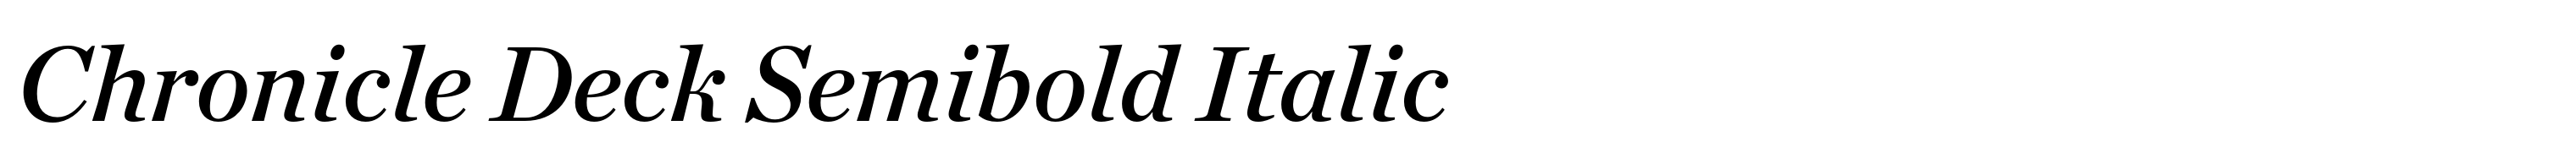 Chronicle Deck Semibold Italic